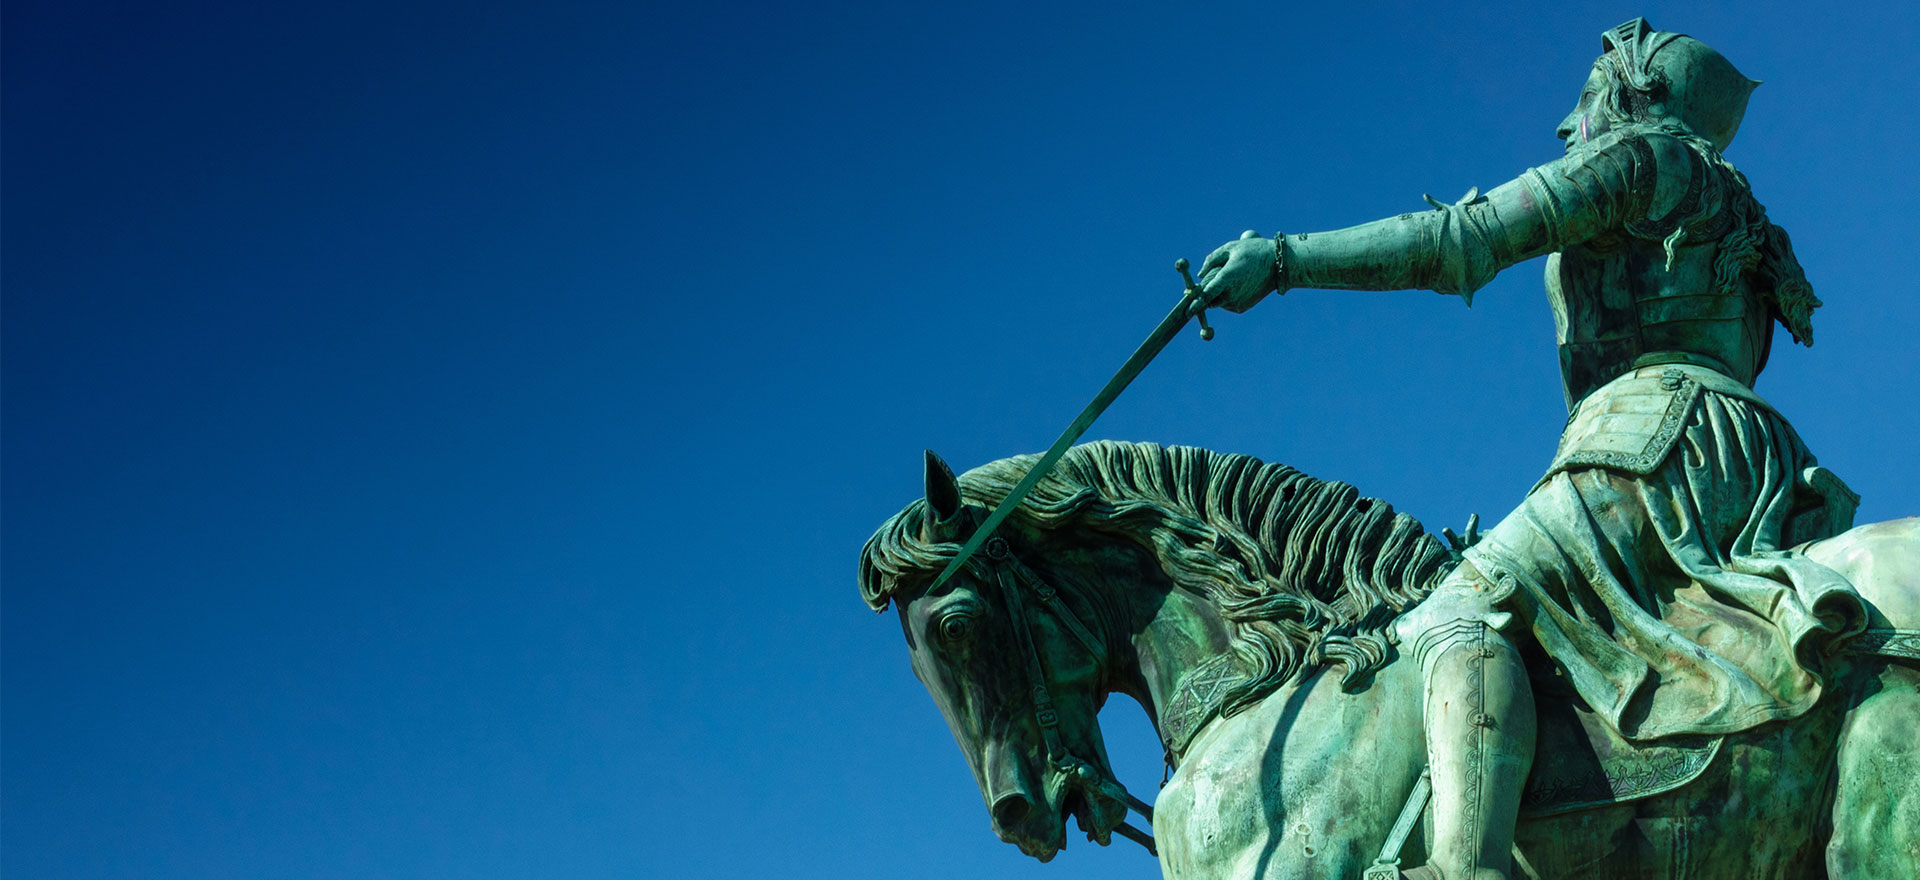 Statue d'un cavalier en bronze avec un ciel bleu